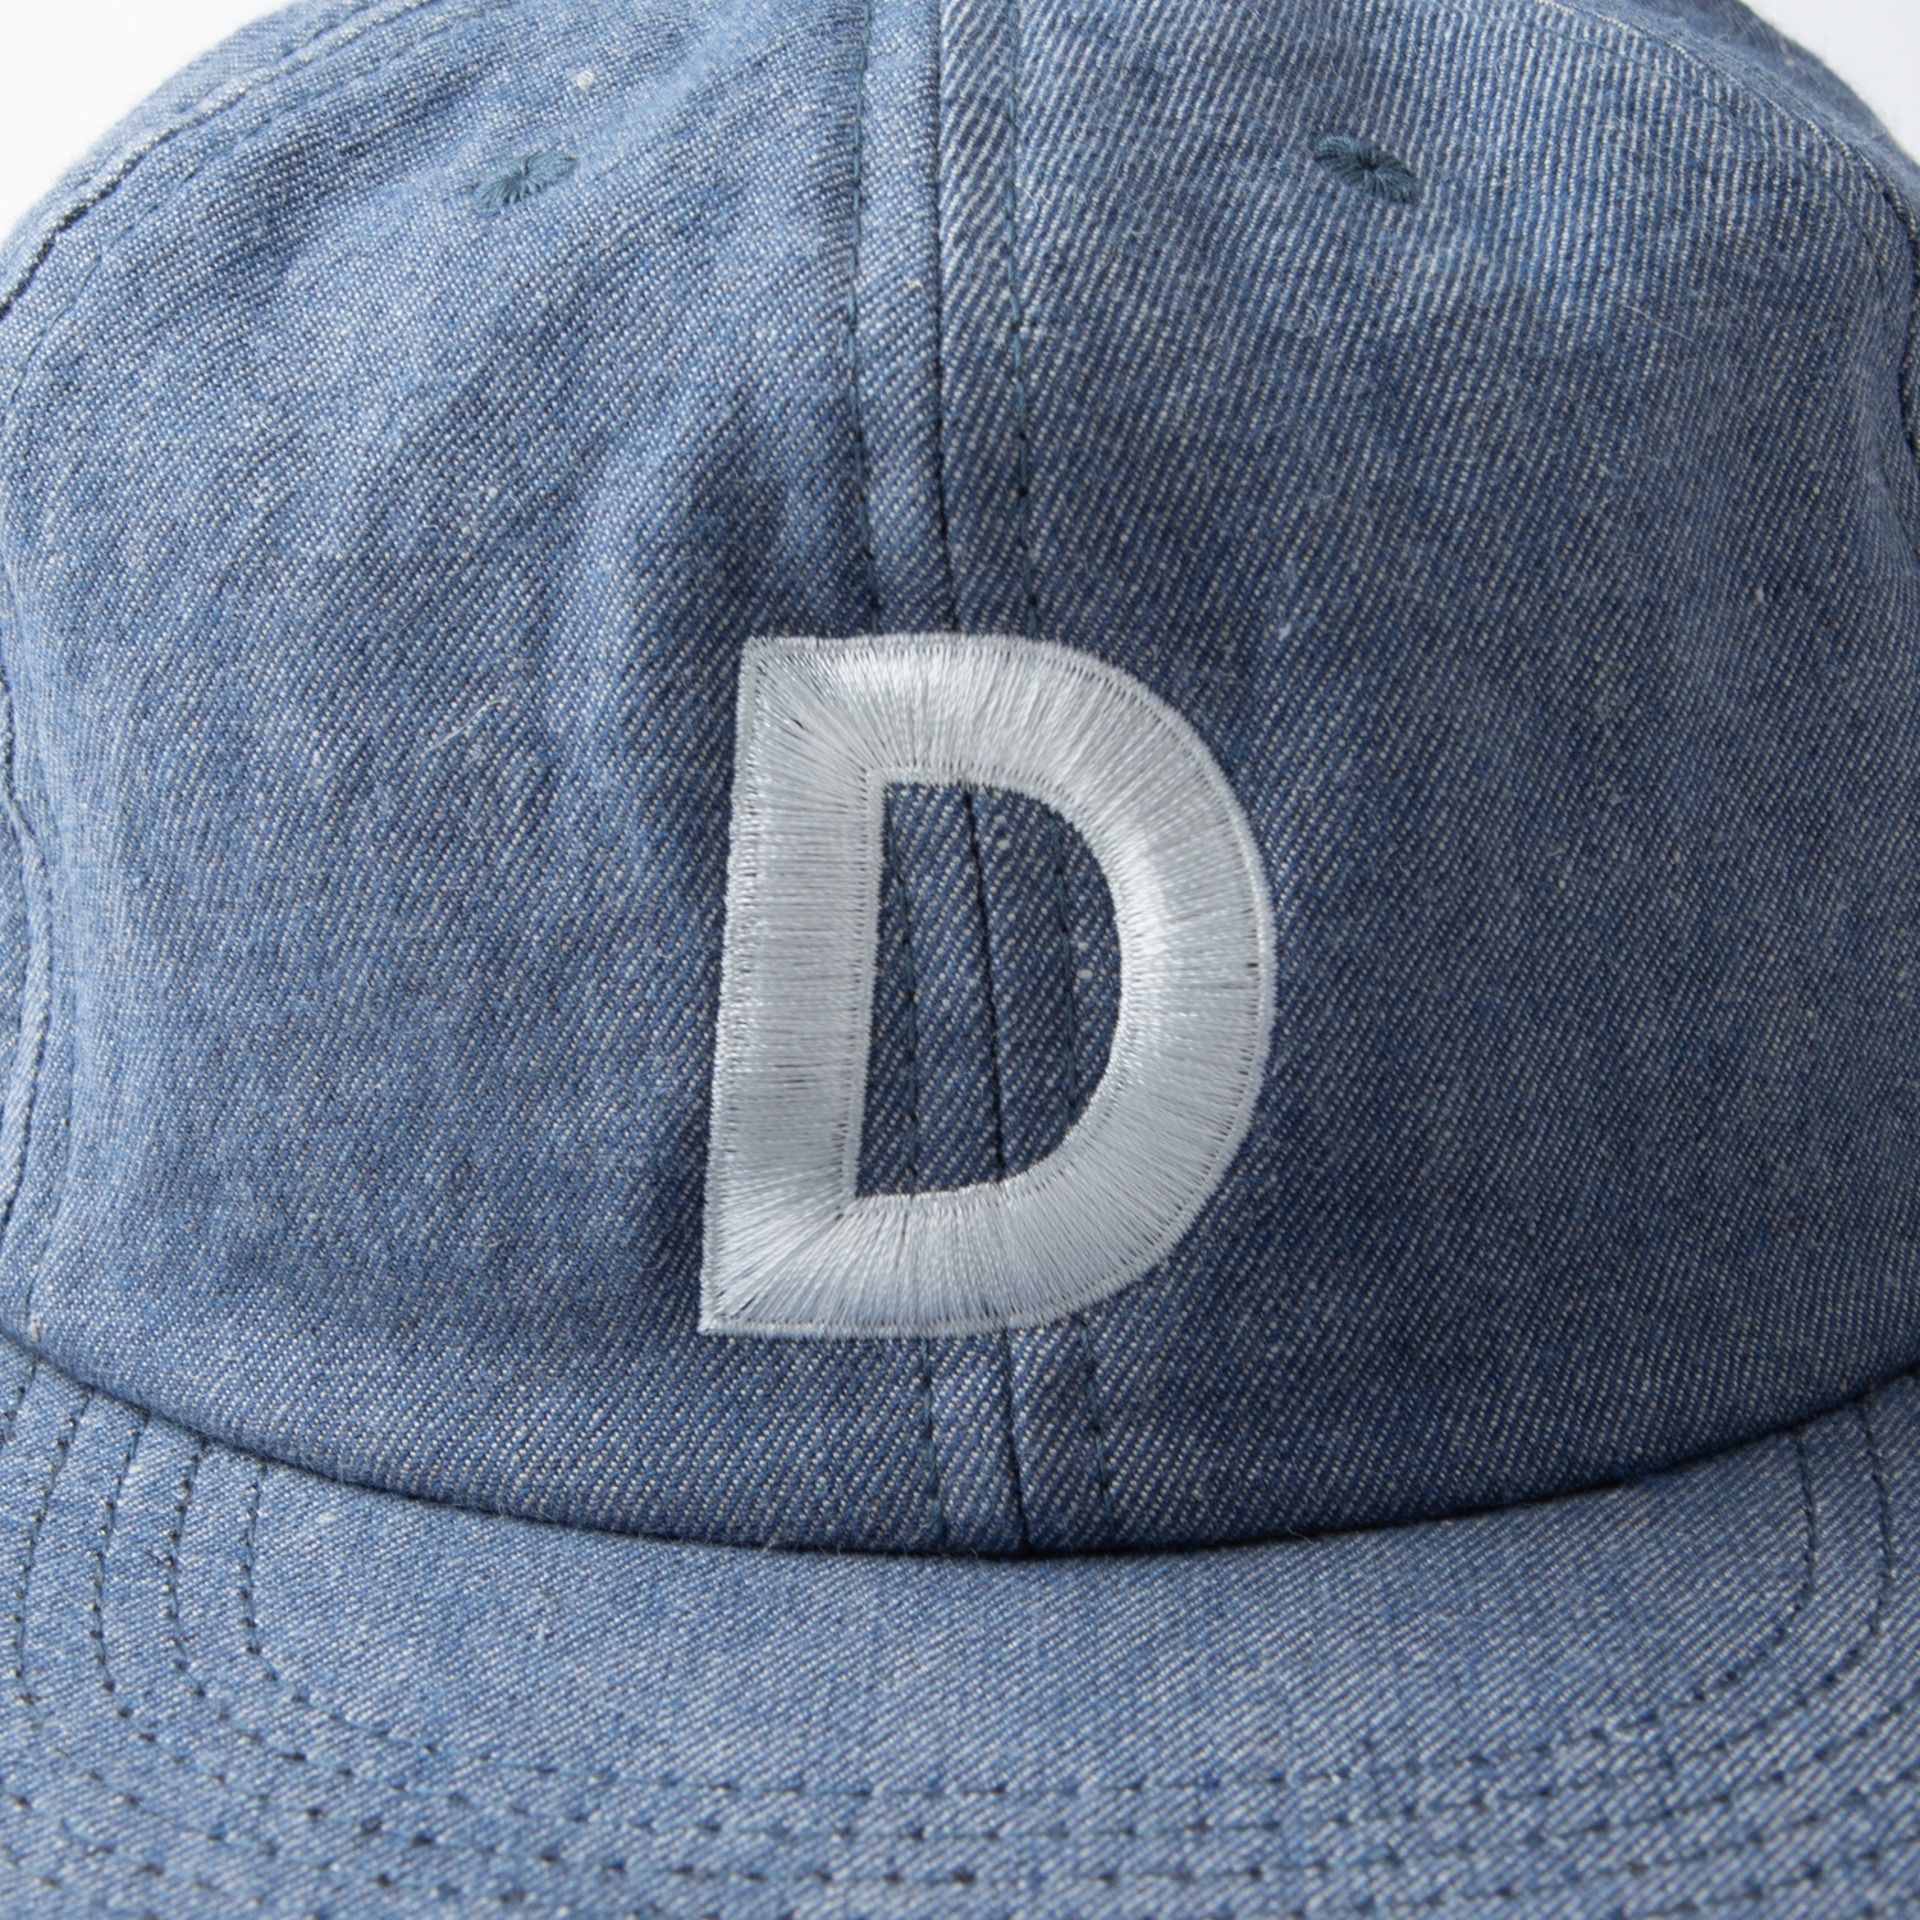 D SKATE CAP (Indigo)